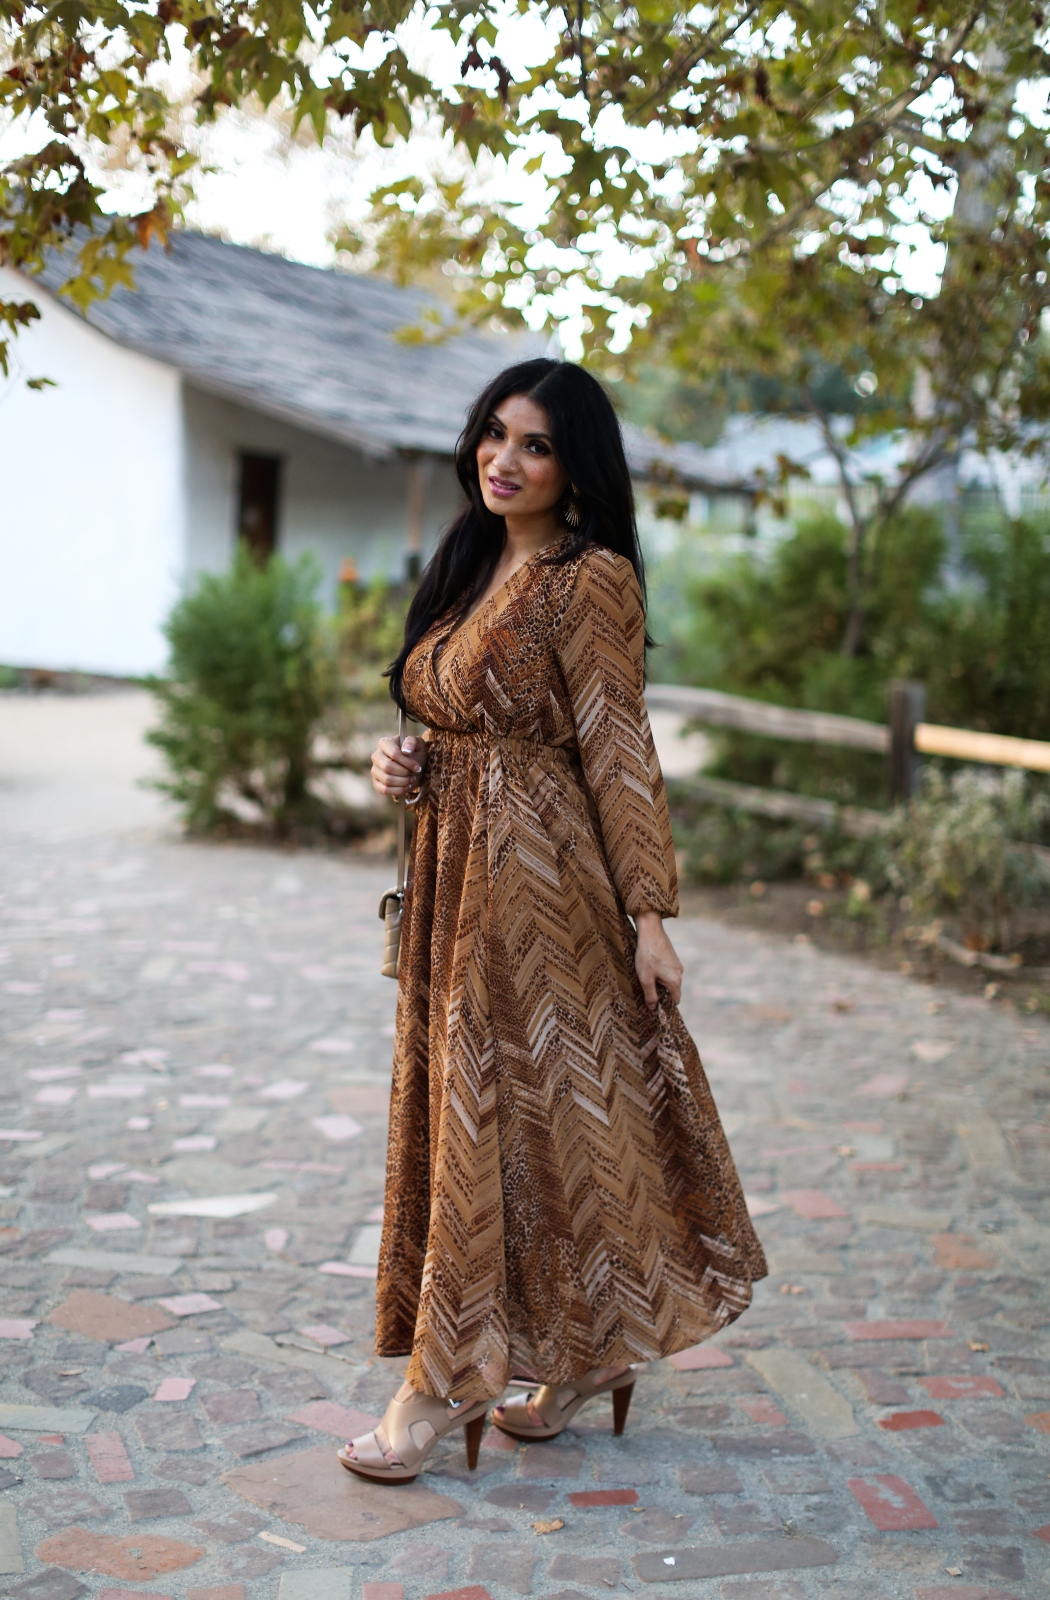 Debbie Savage Orange County California Fashion Blogger Adyson Parker V-Neck Long Sleeve Print Dress Brown Dresses for Fall 